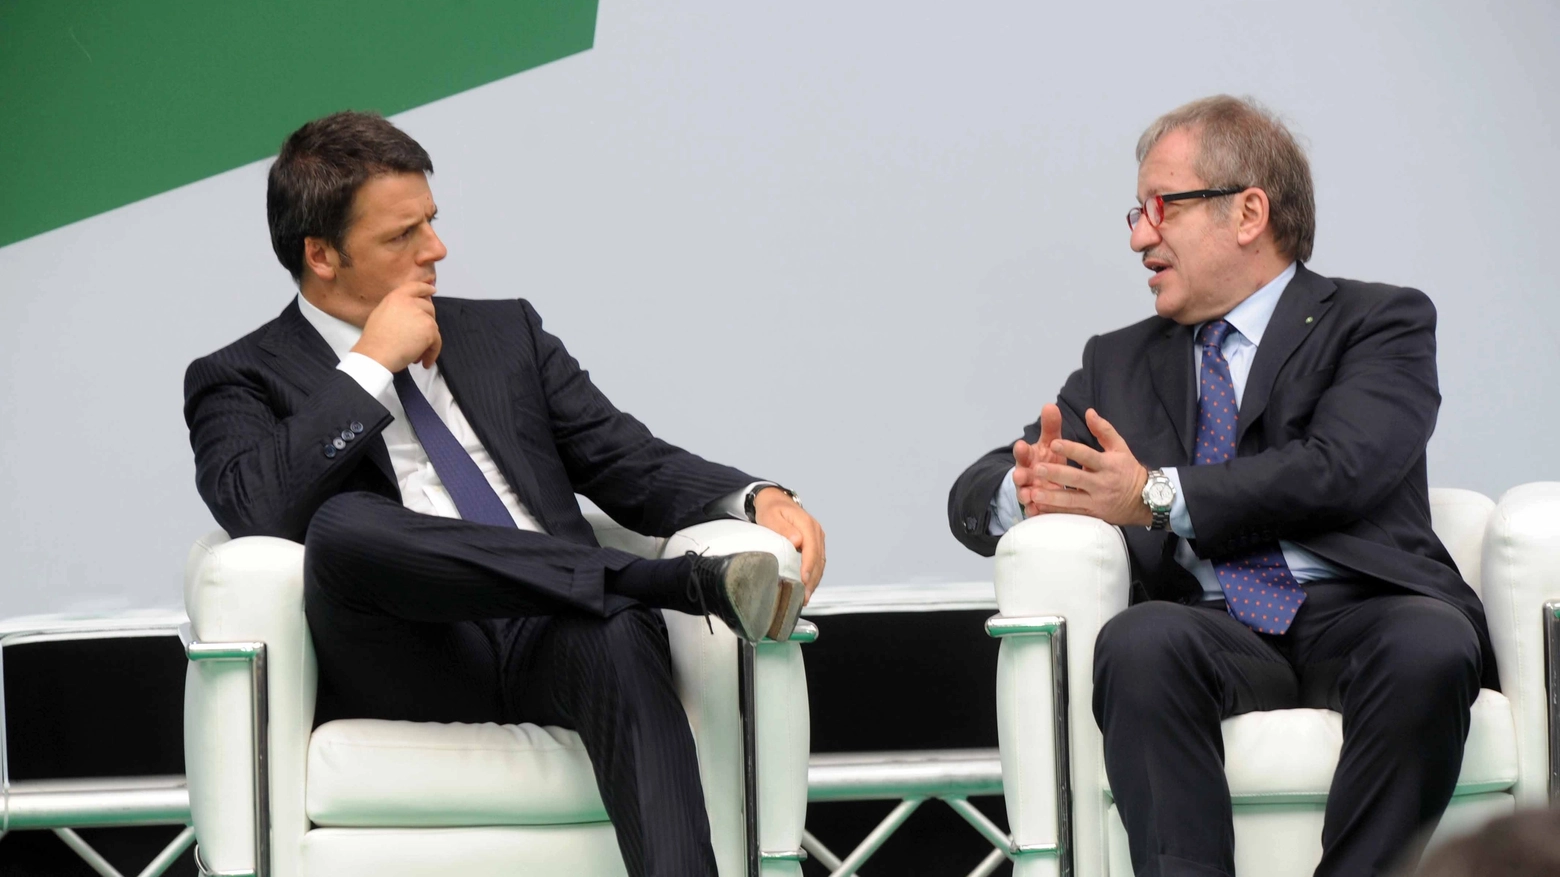 Roberto Maroni e Matteo Renzi